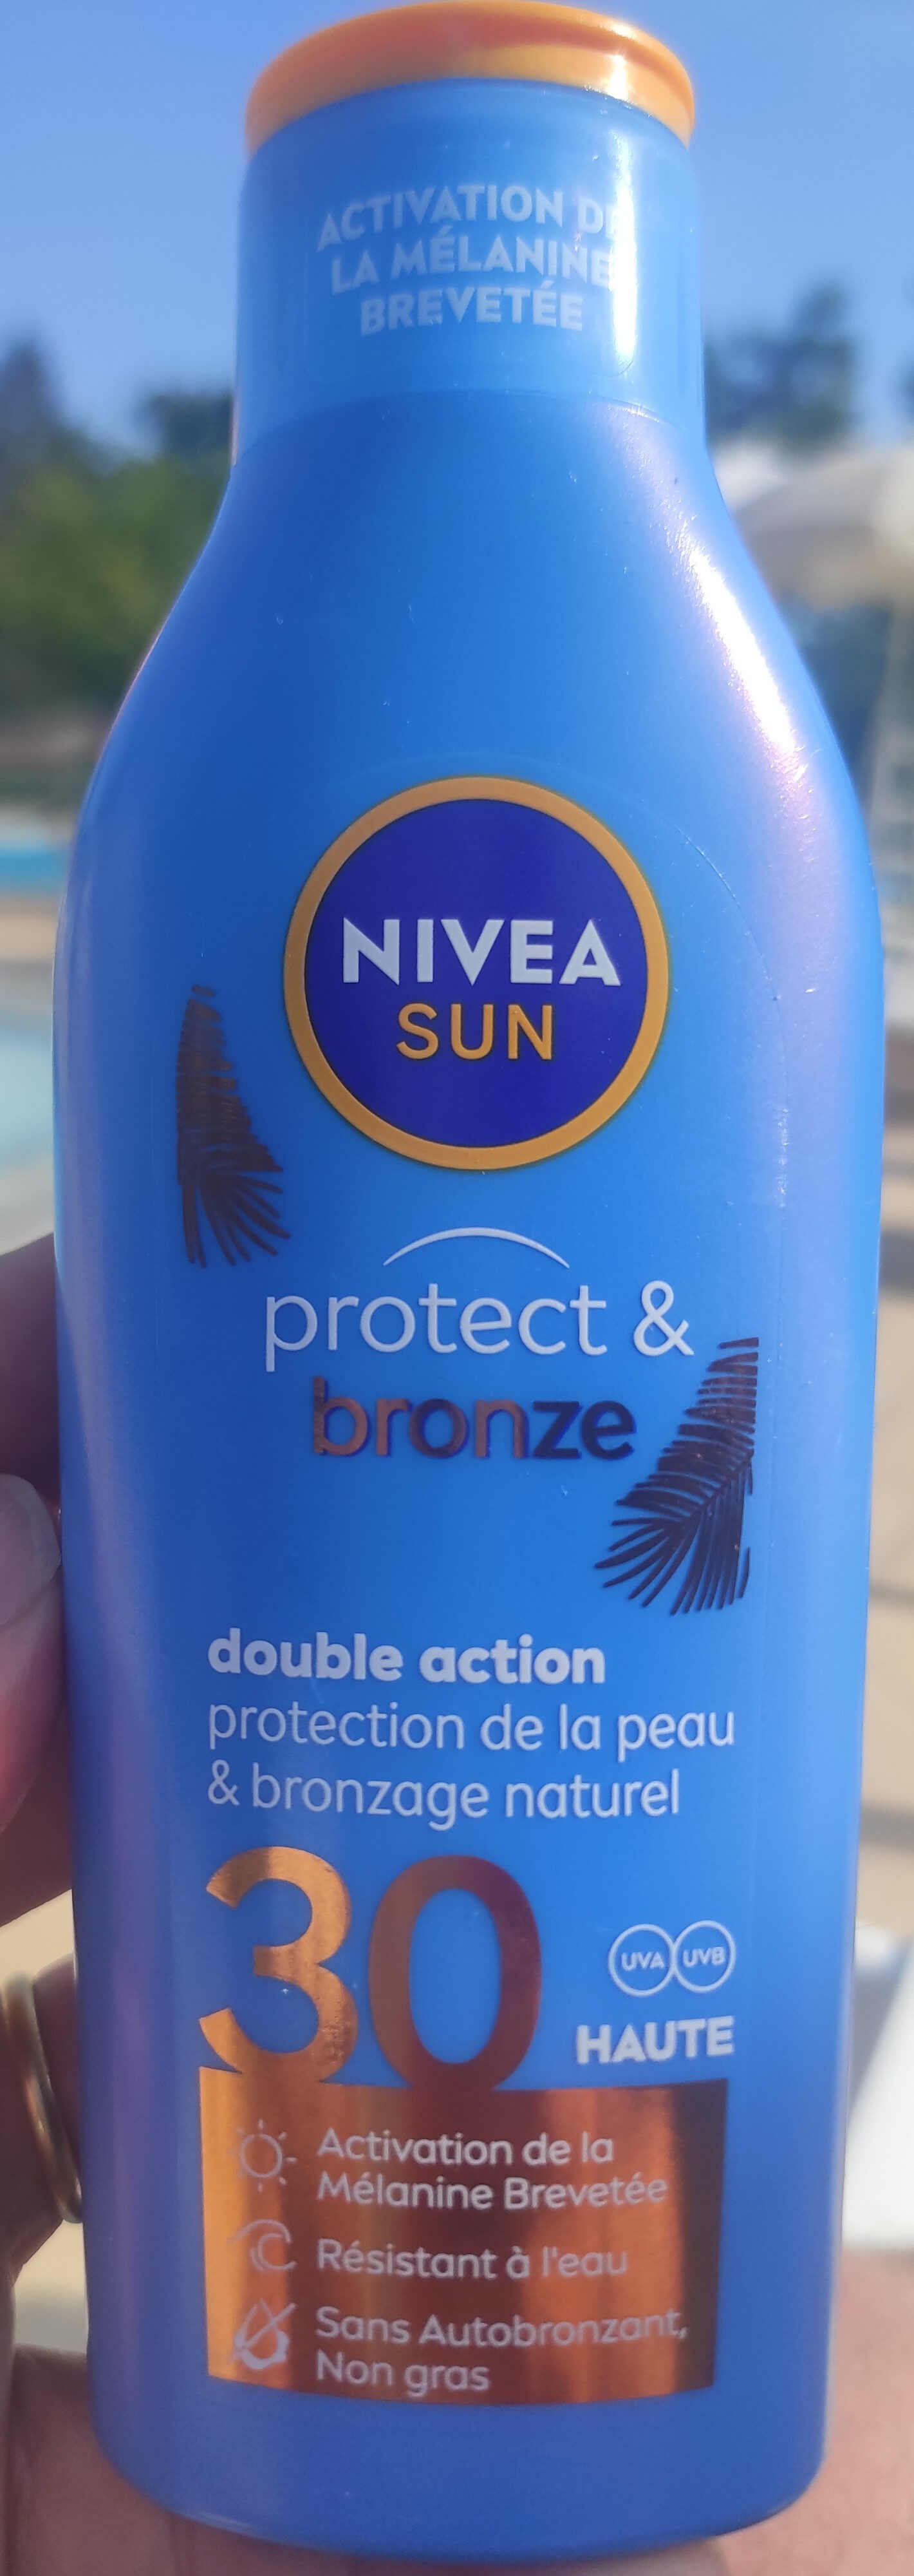 Nivea Sun protect & bronze - Product - fr